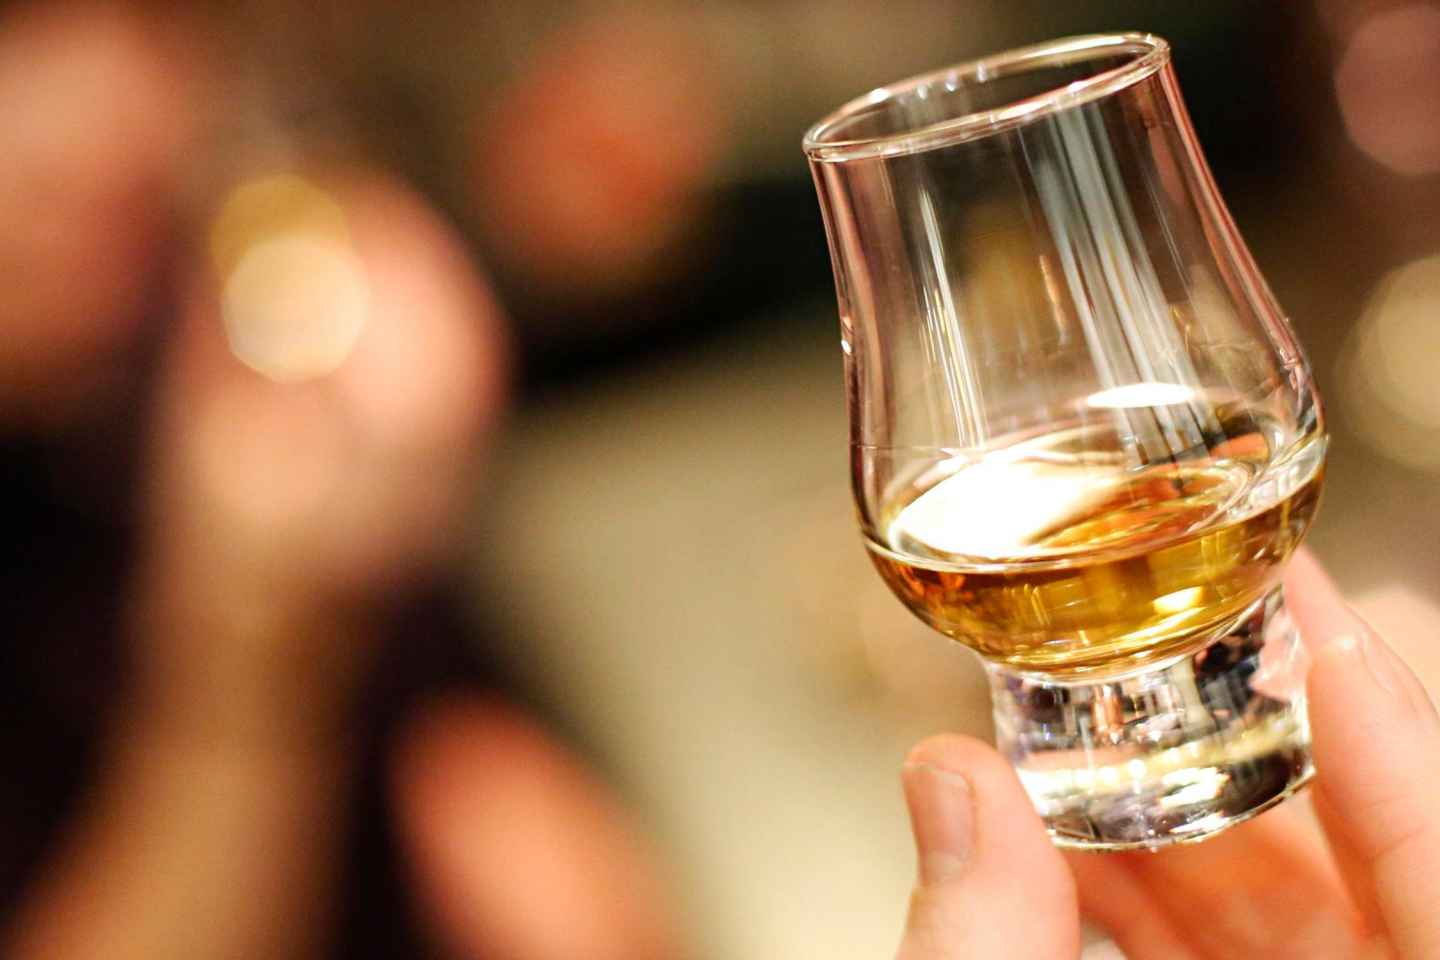 Edinburgh: History of Whisky with Tasting and Storytelling